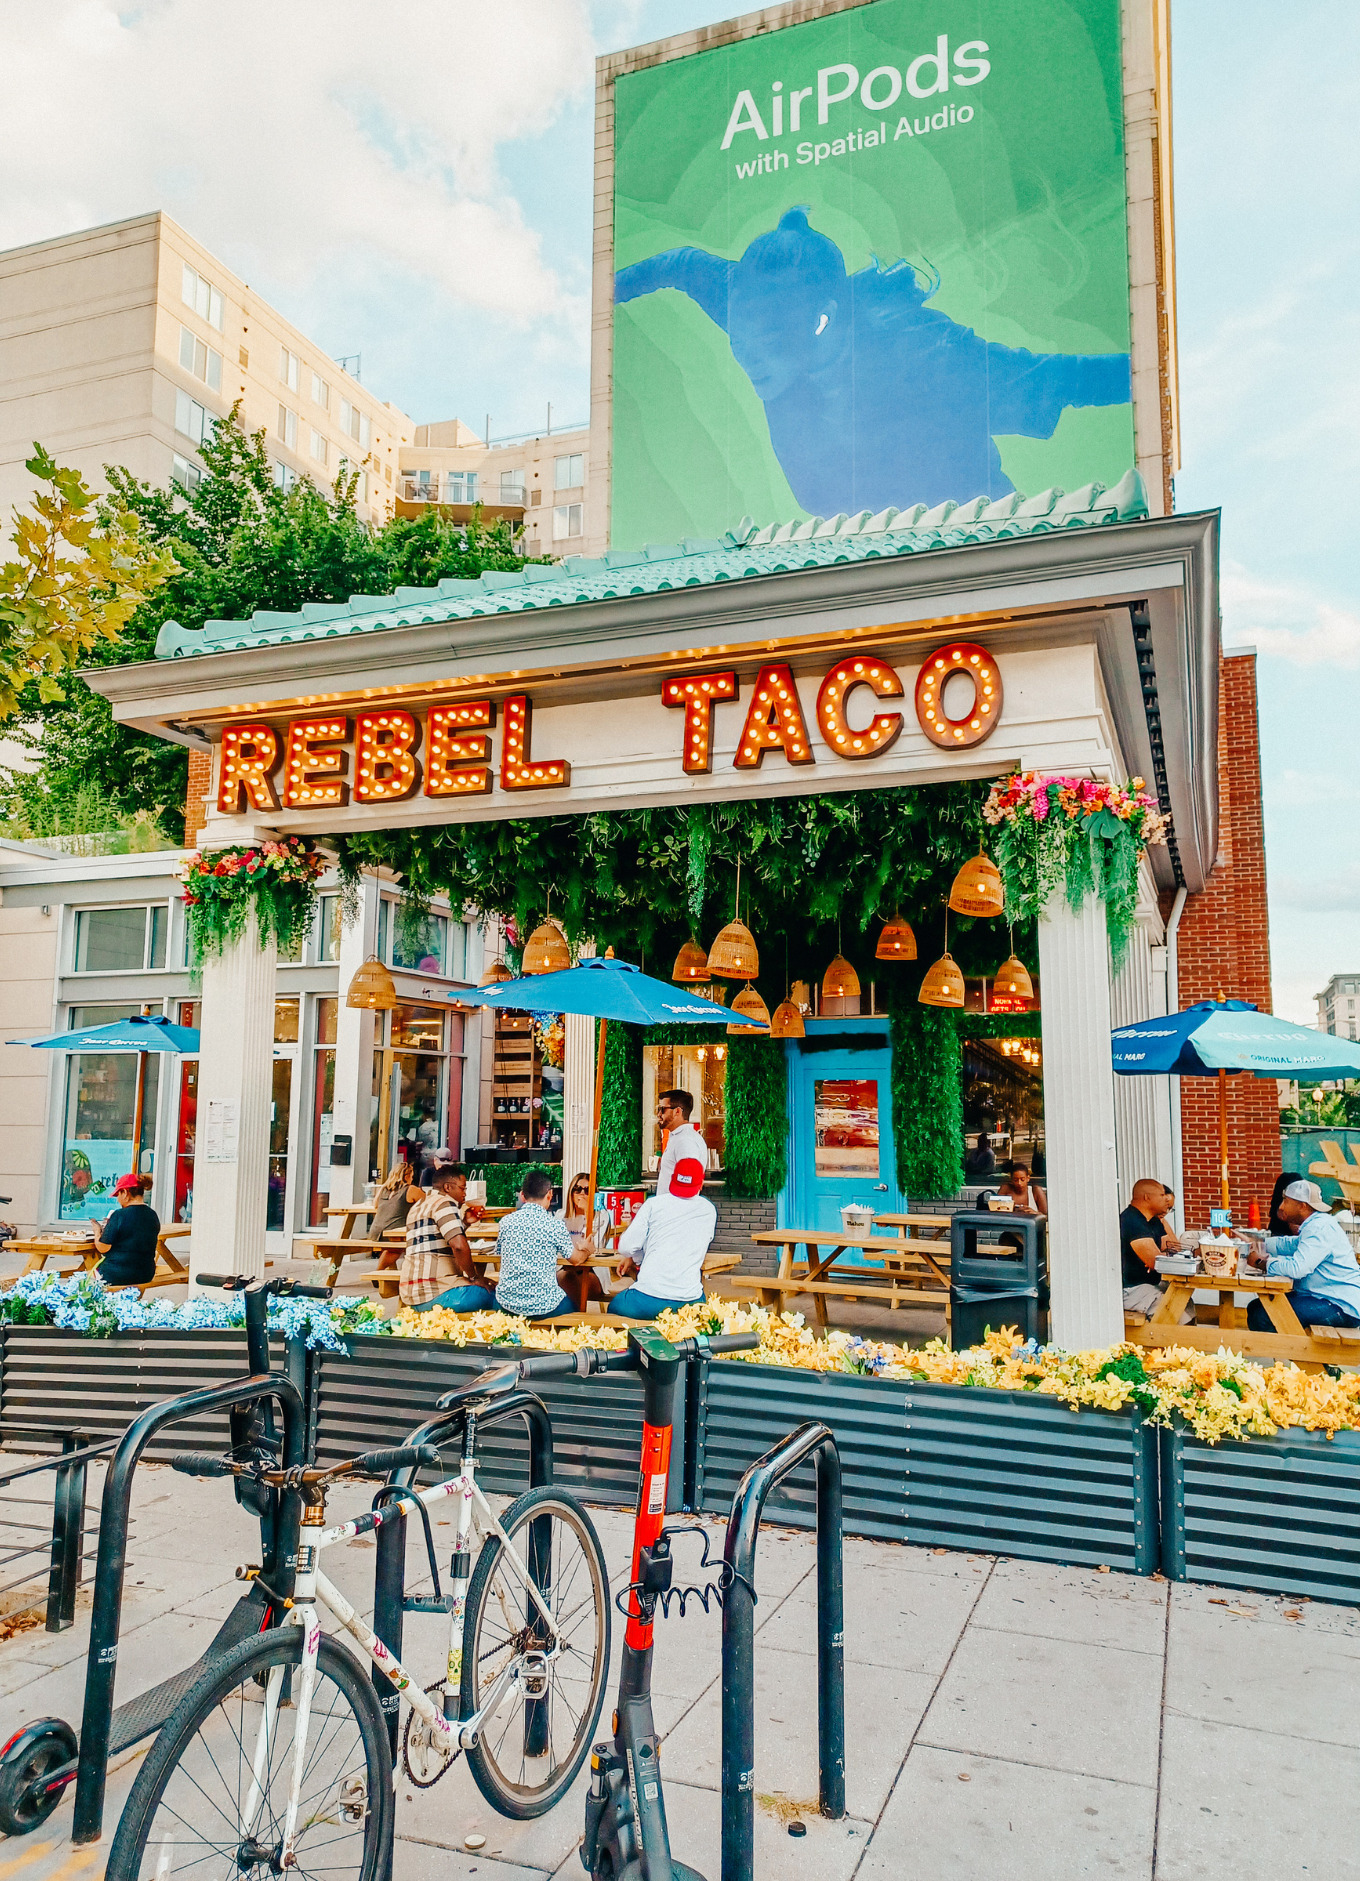 Customers sit outside enjoying a terrific meal at Rebel Taco restaurant in Washington, DC.